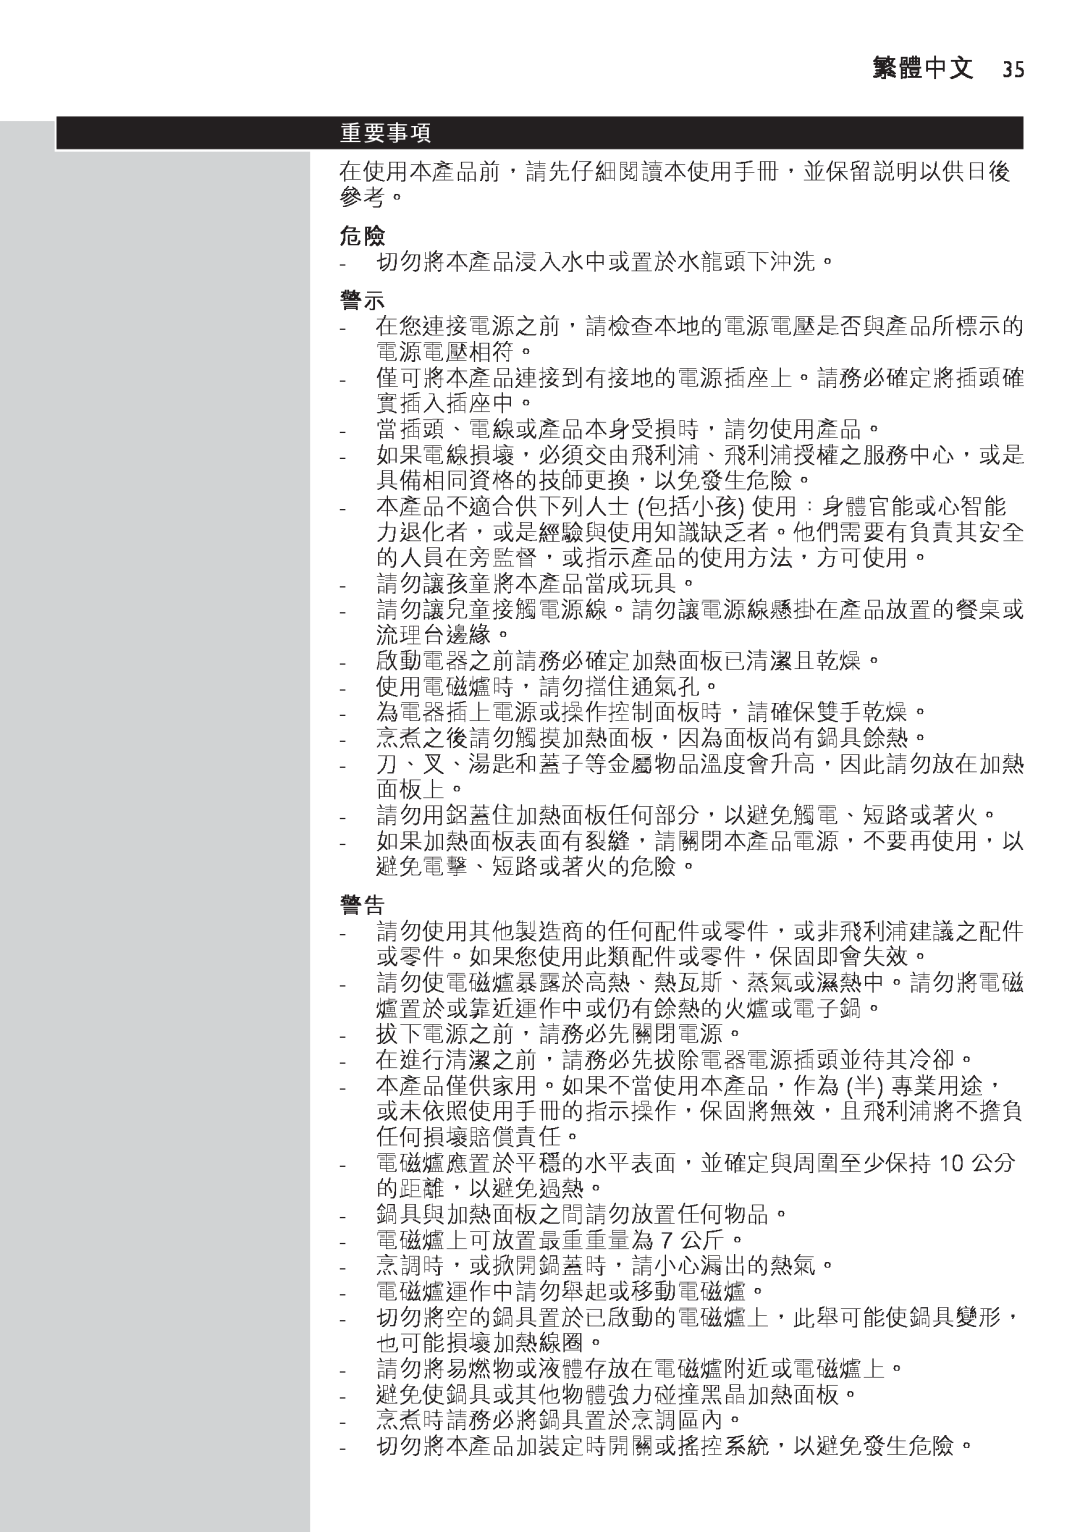 Philips HD4918 manual 繁體中文, 重要事項 